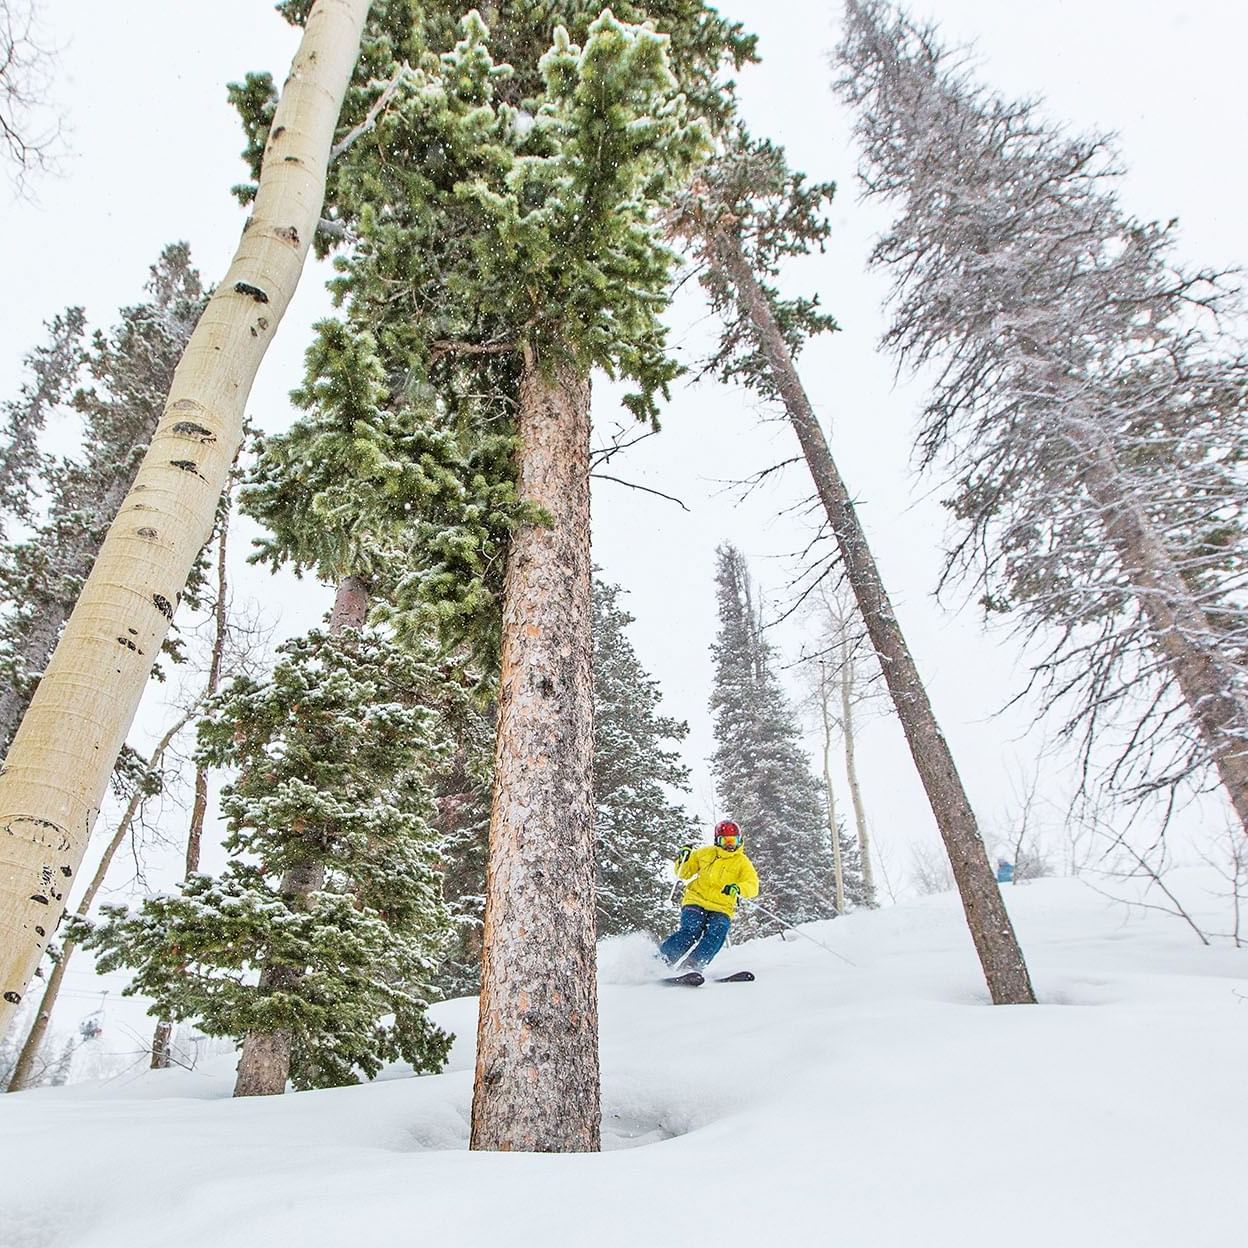 Skier in trees